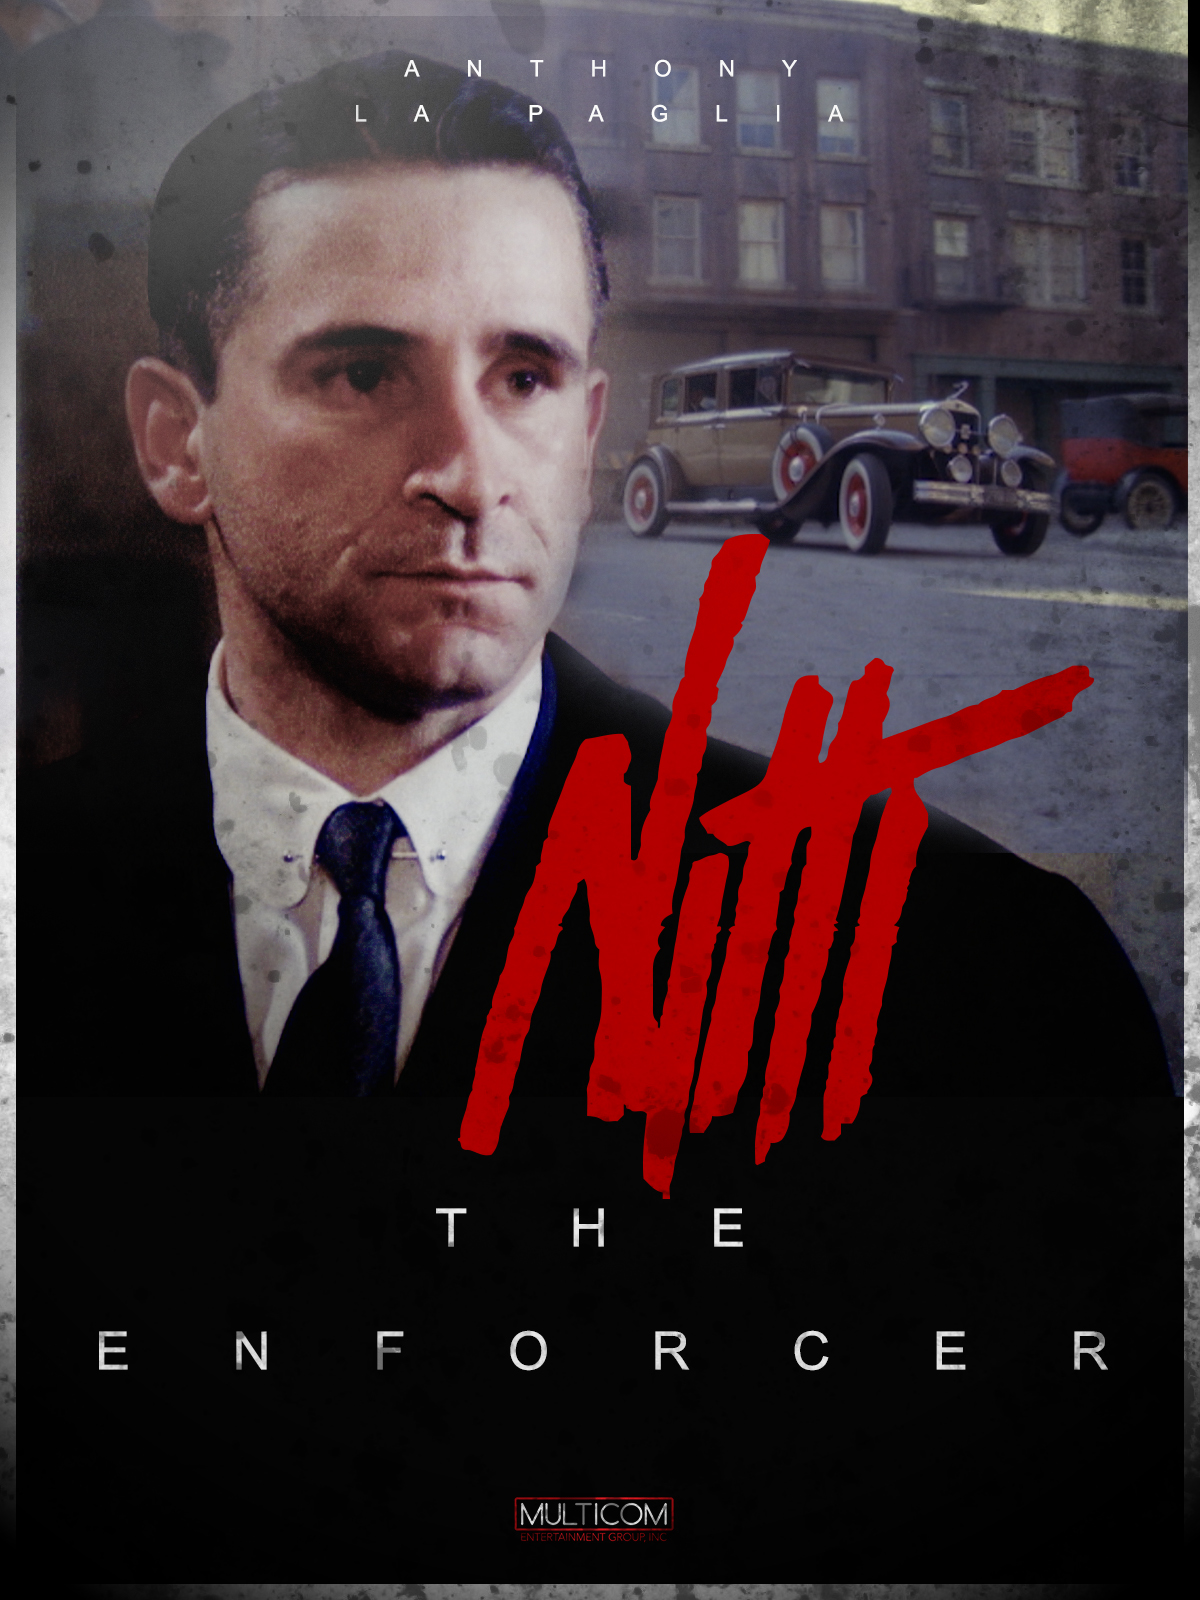 Frank Nitti: The Enforcer (1988) starring Anthony LaPaglia on DVD on DVD